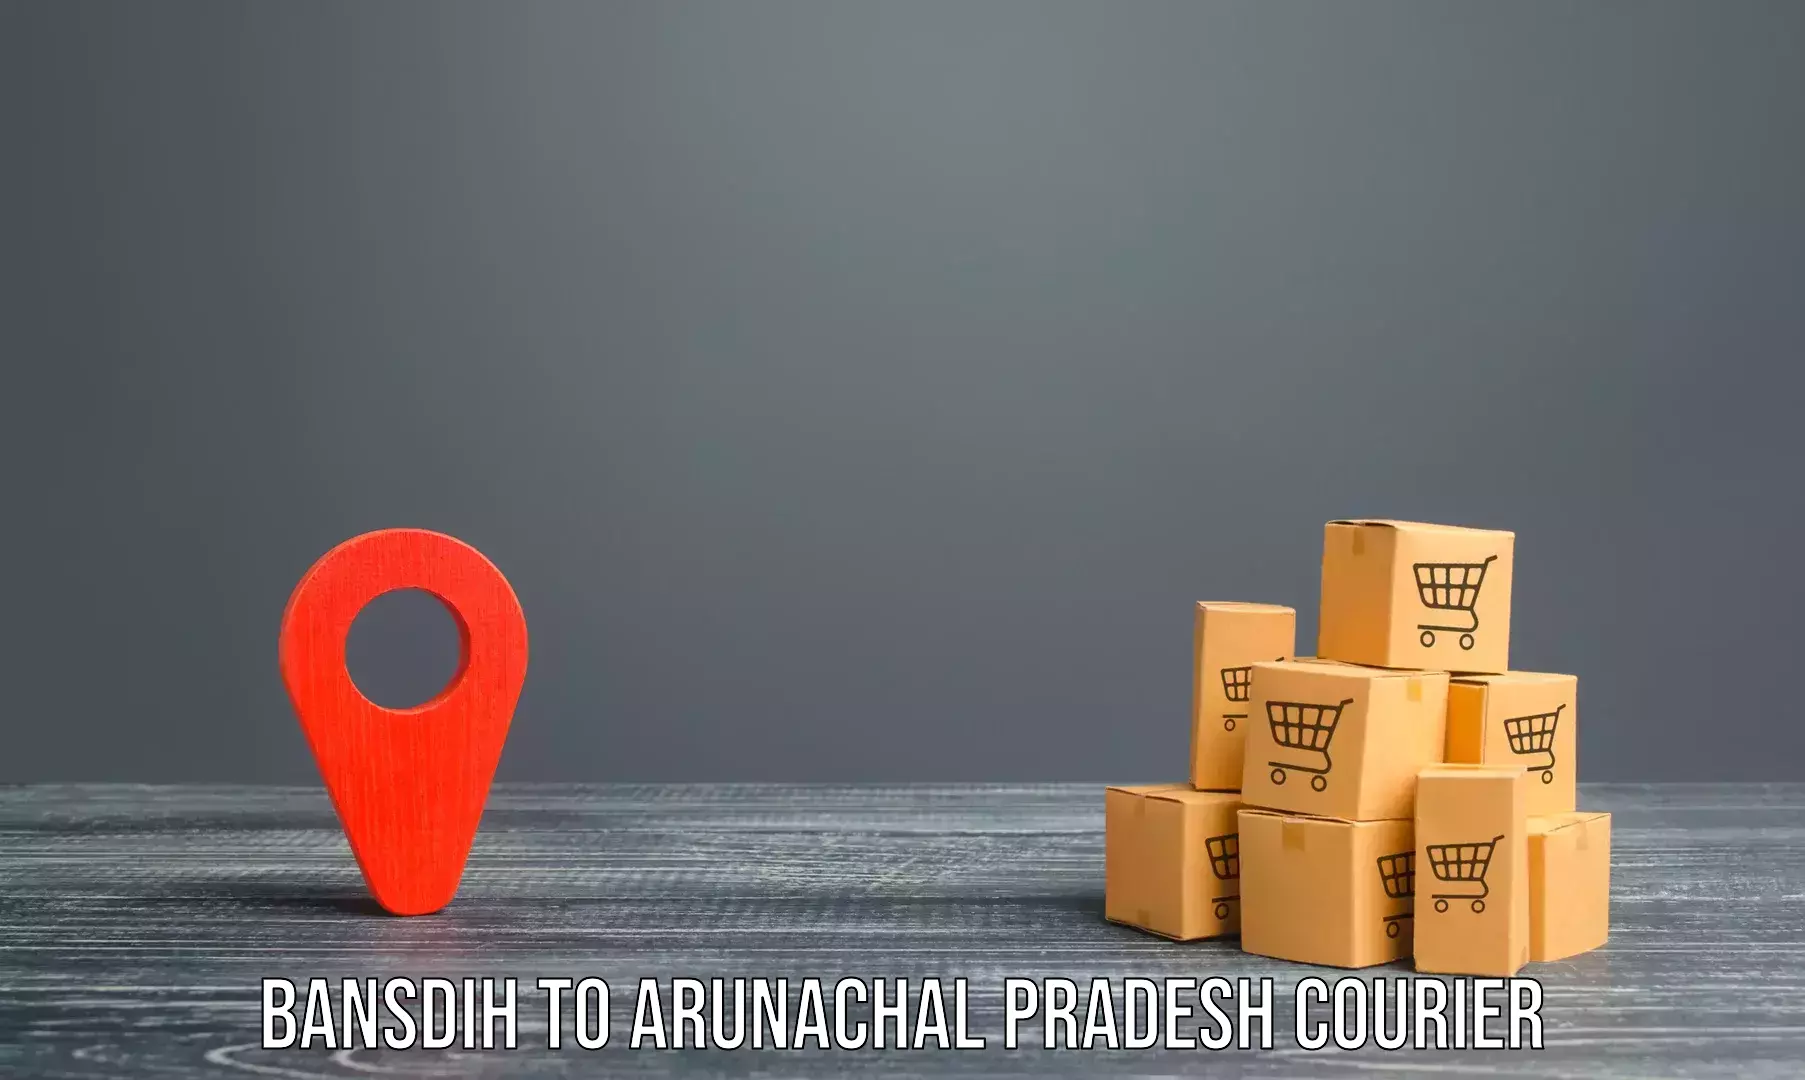 Professional moving company Bansdih to Arunachal Pradesh